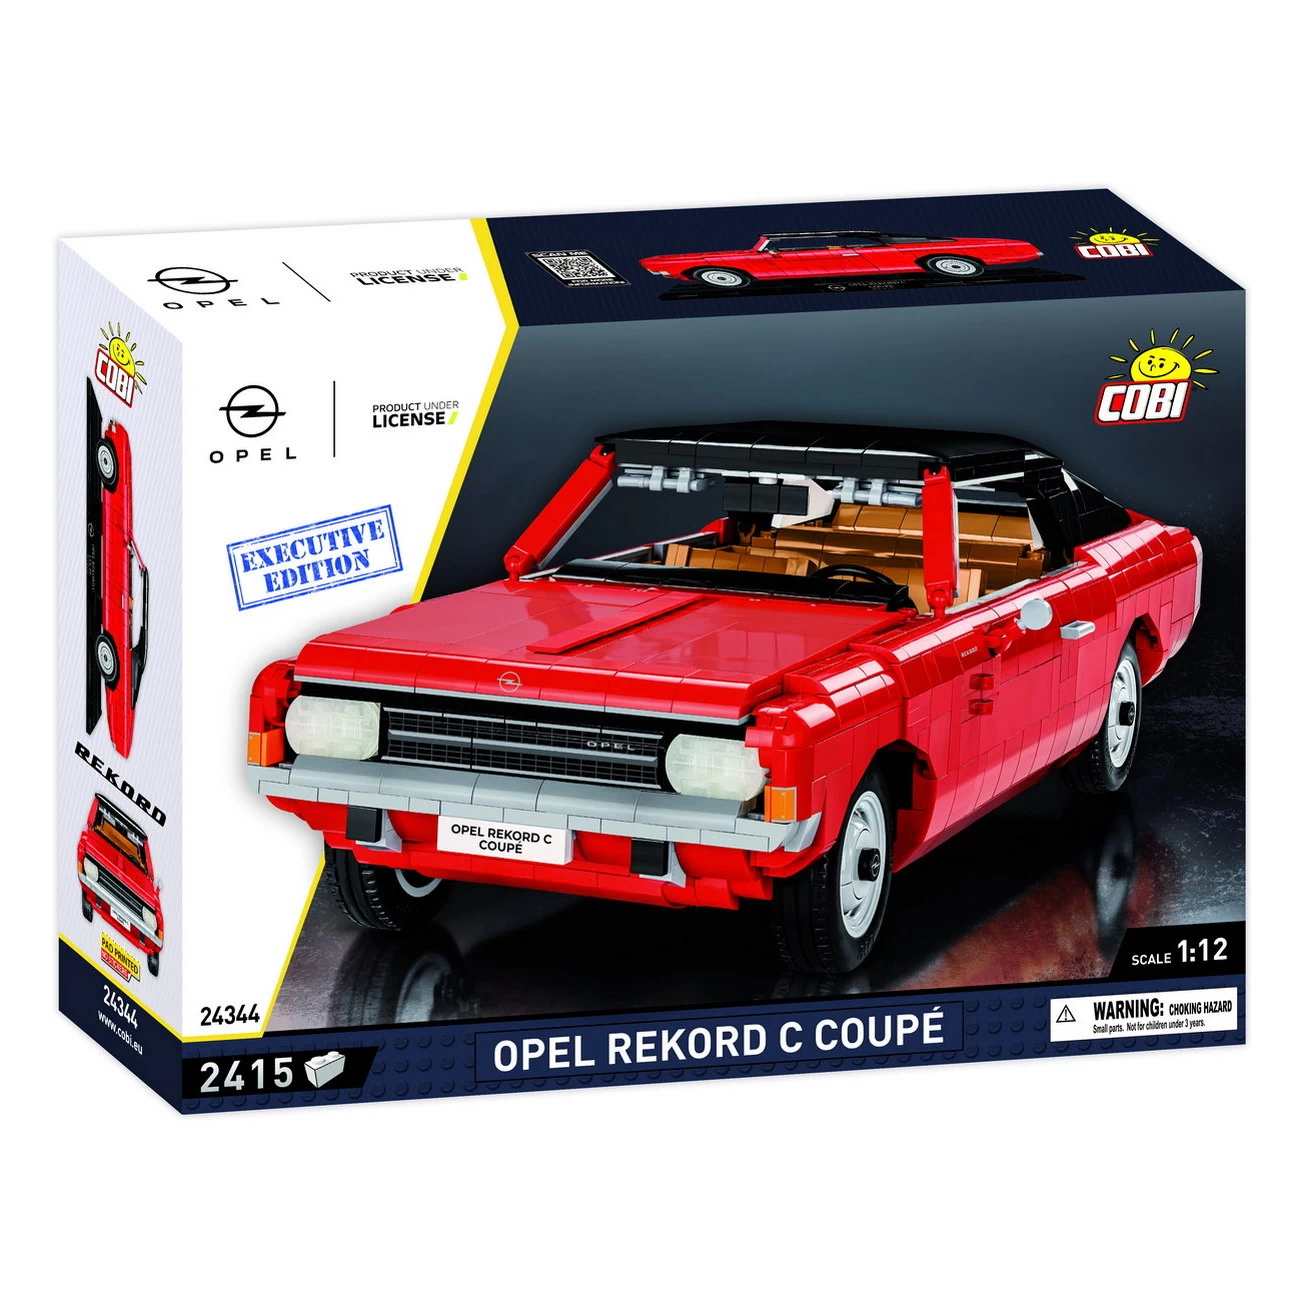 COBI - Opel Rekord C Coupe (24344) - Executive Edition